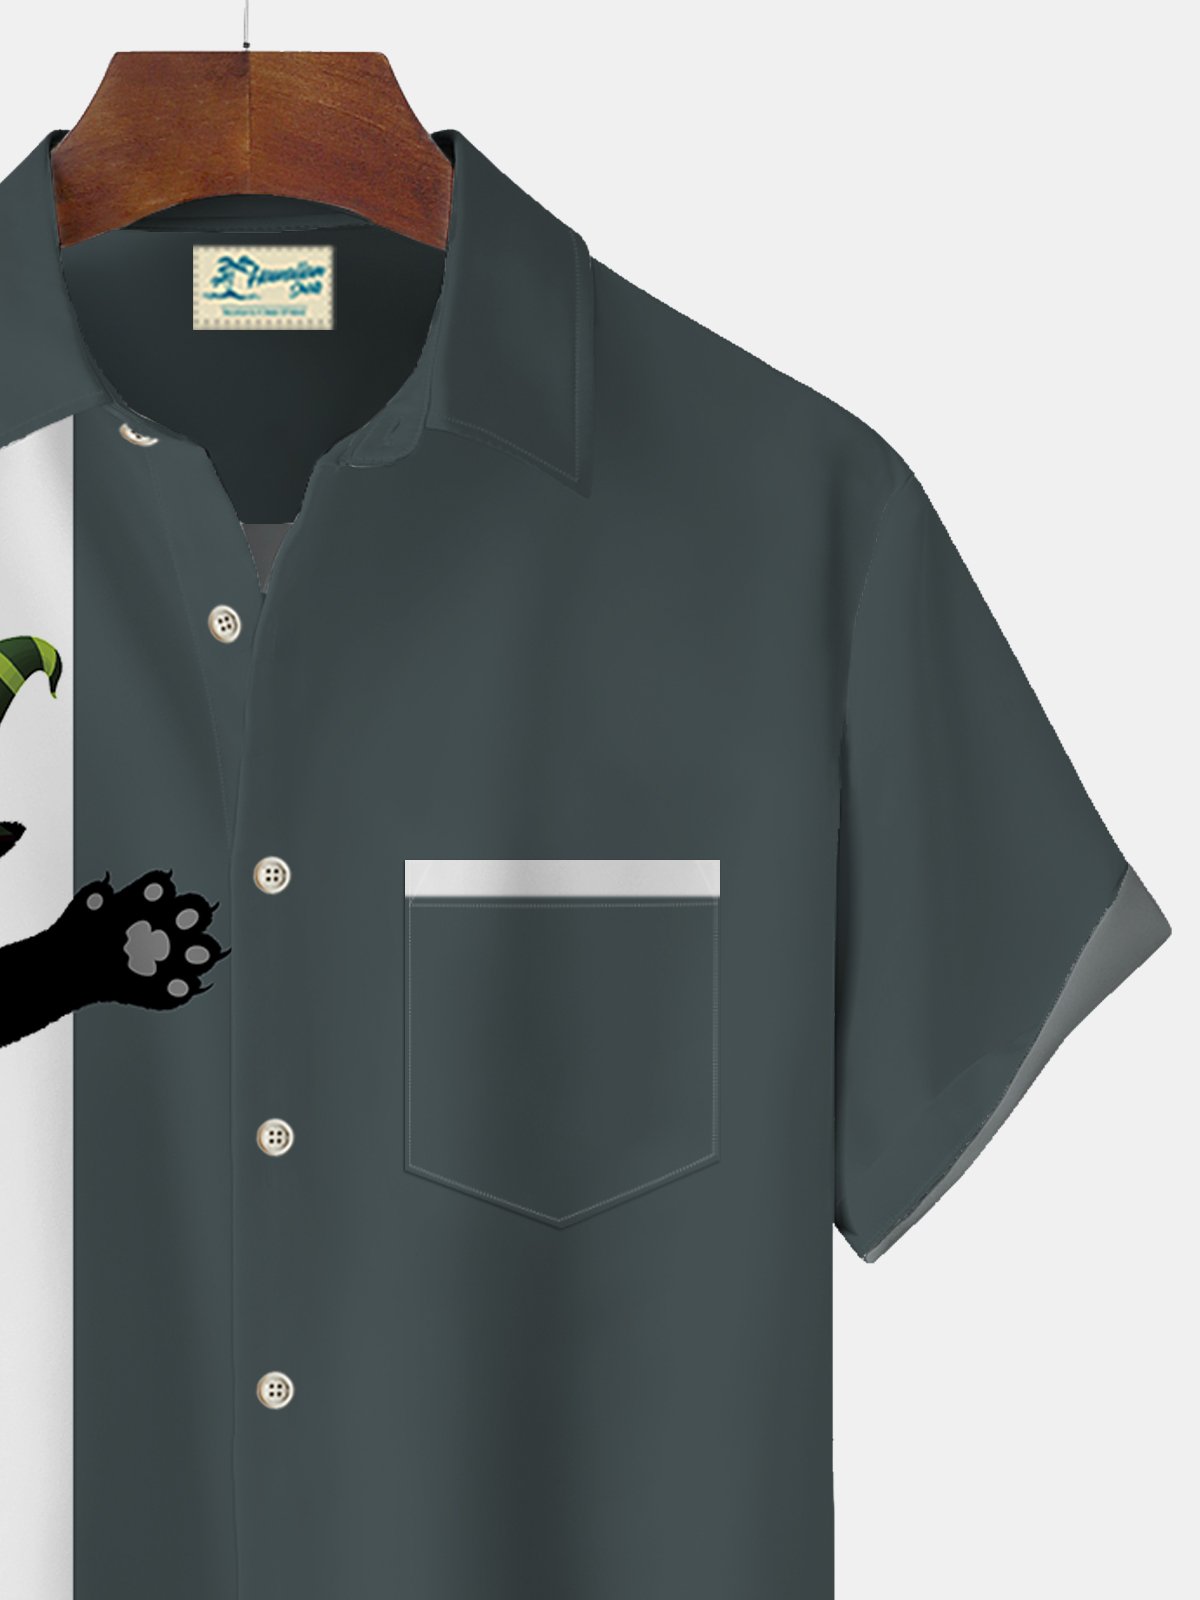 JoyMitty Vintage Bowling Halloween Black Cat Print Beach Men's Hawaiian Oversized Short Sleeve Shirt with Pockets